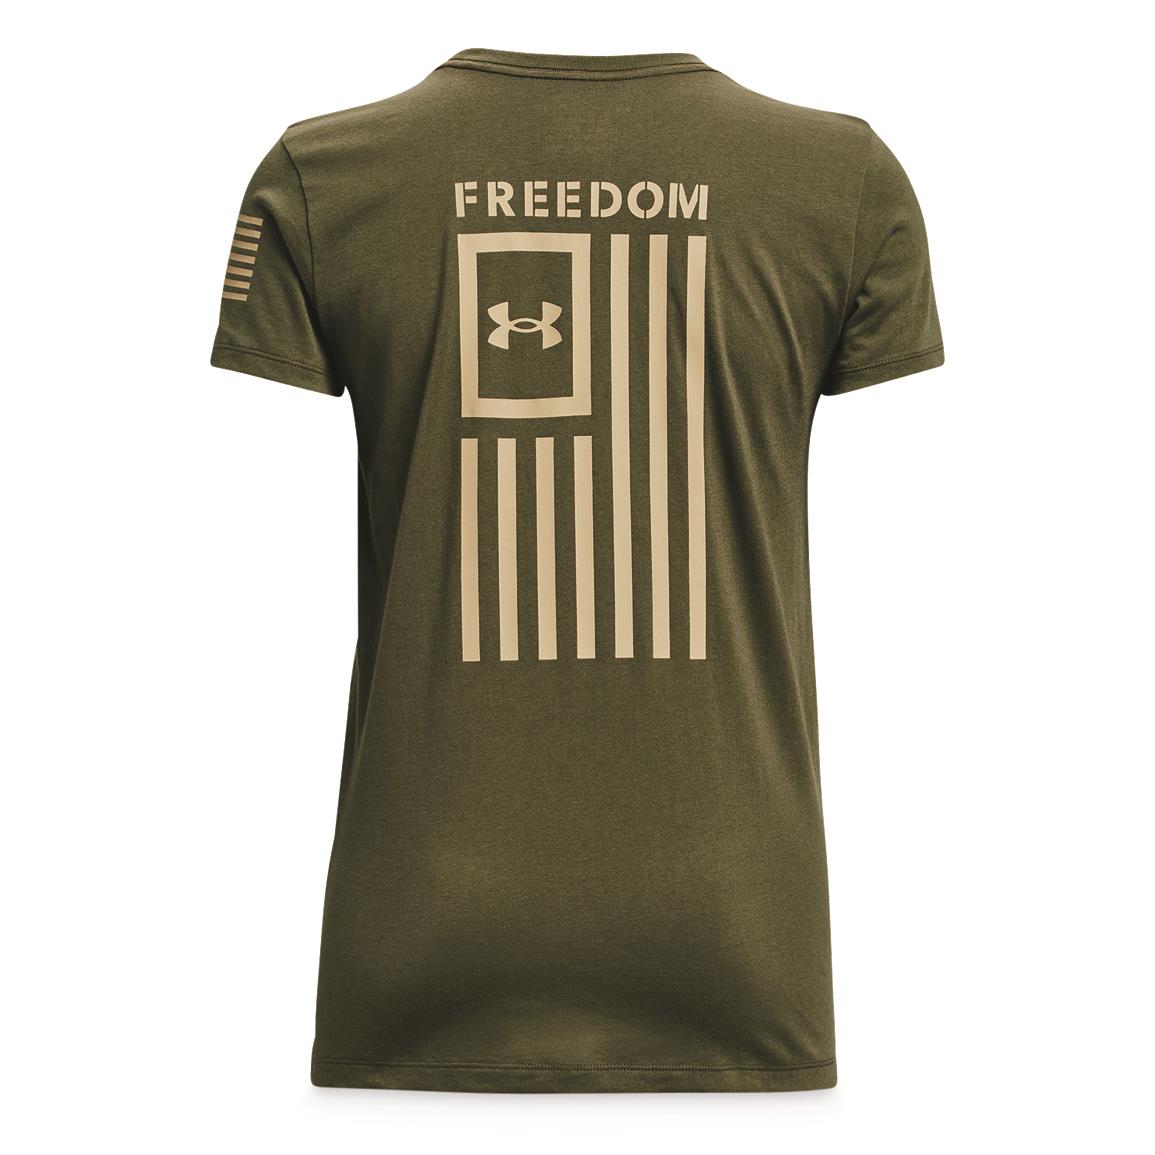 Under Armour Women's Freedom Flag Shirt, Marine OD Green/Desert Sand